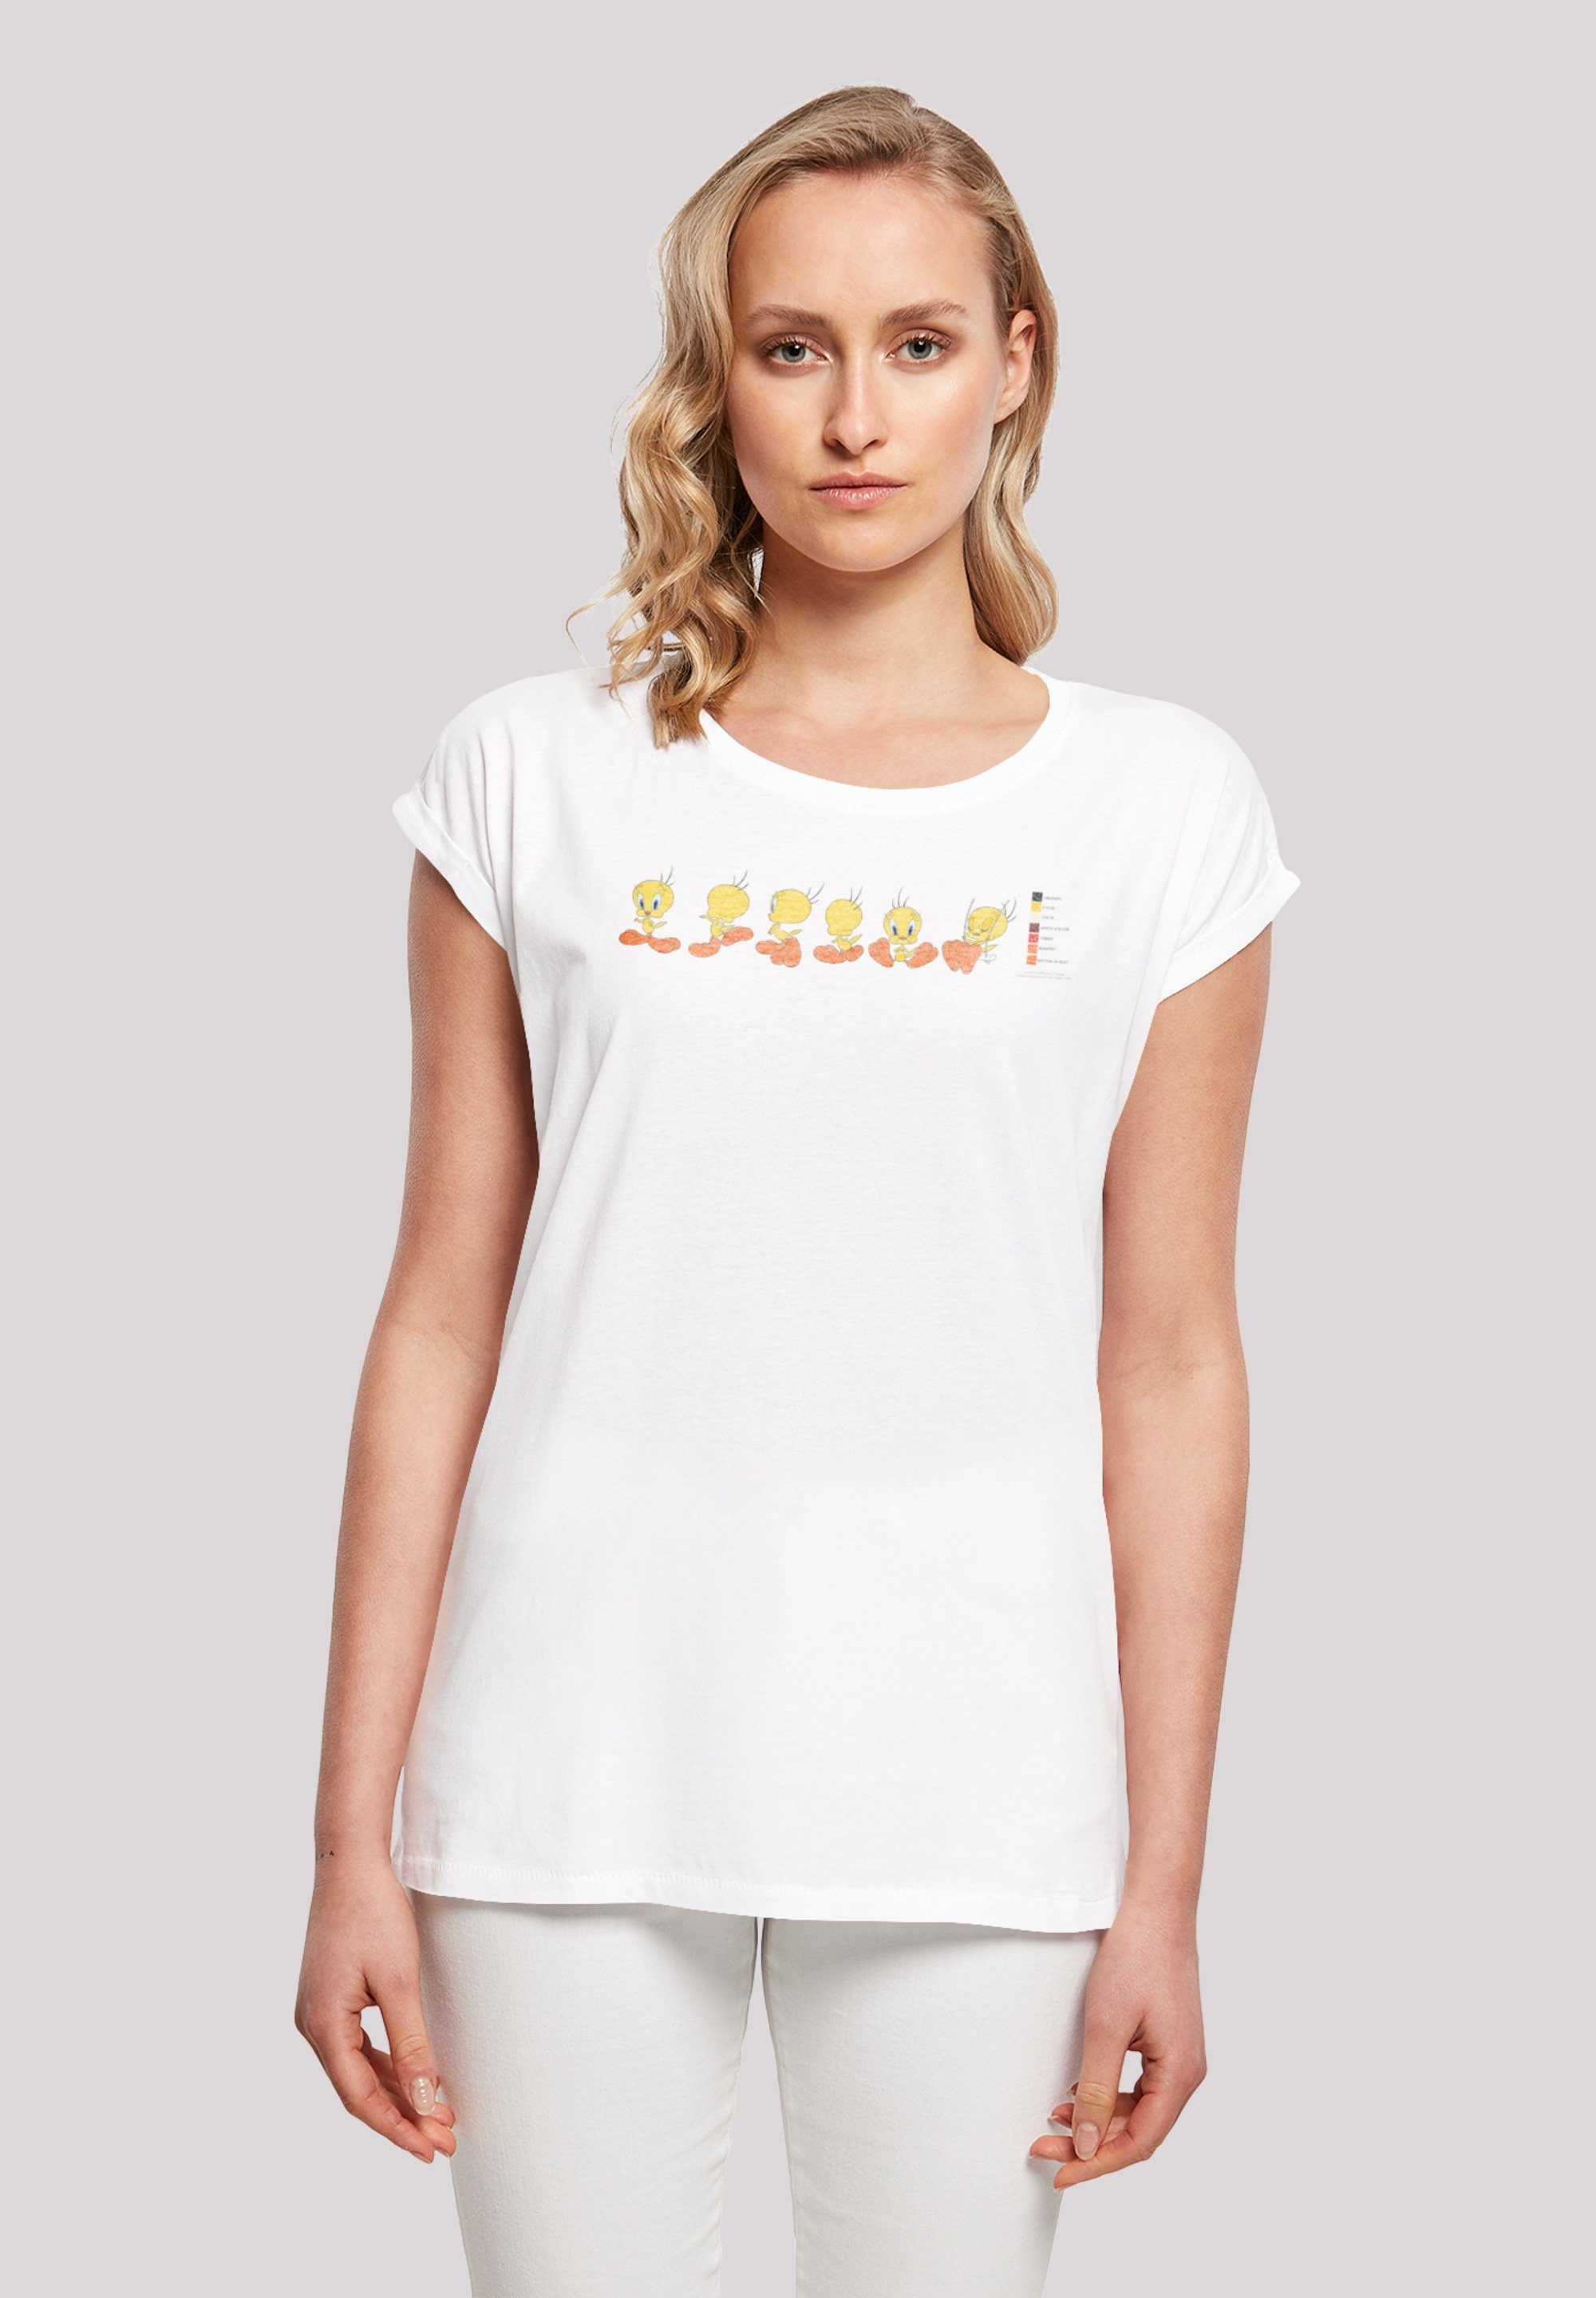 F4NT4STIC T-Shirt Looney Tunes Tweety Pie Colour Code Print